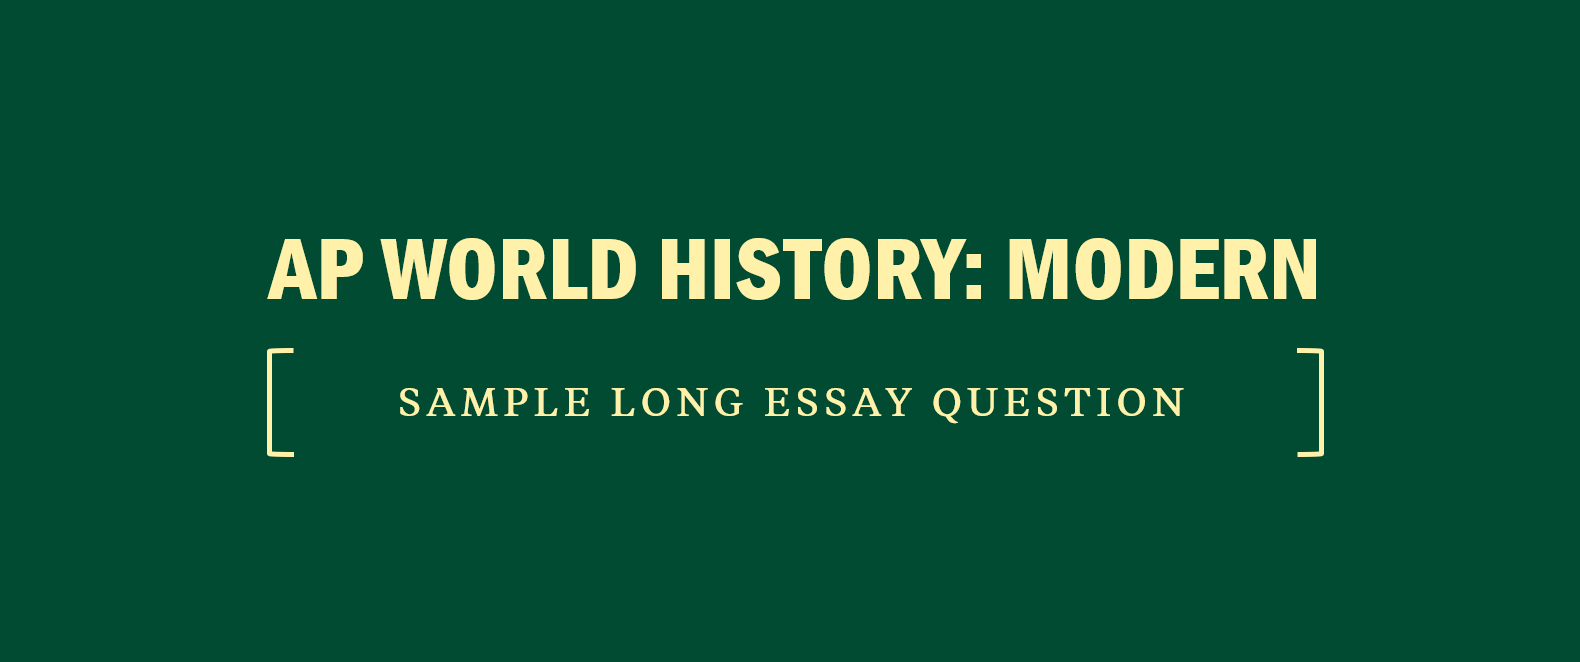 AP World History: Modern Sample Long Essay Question